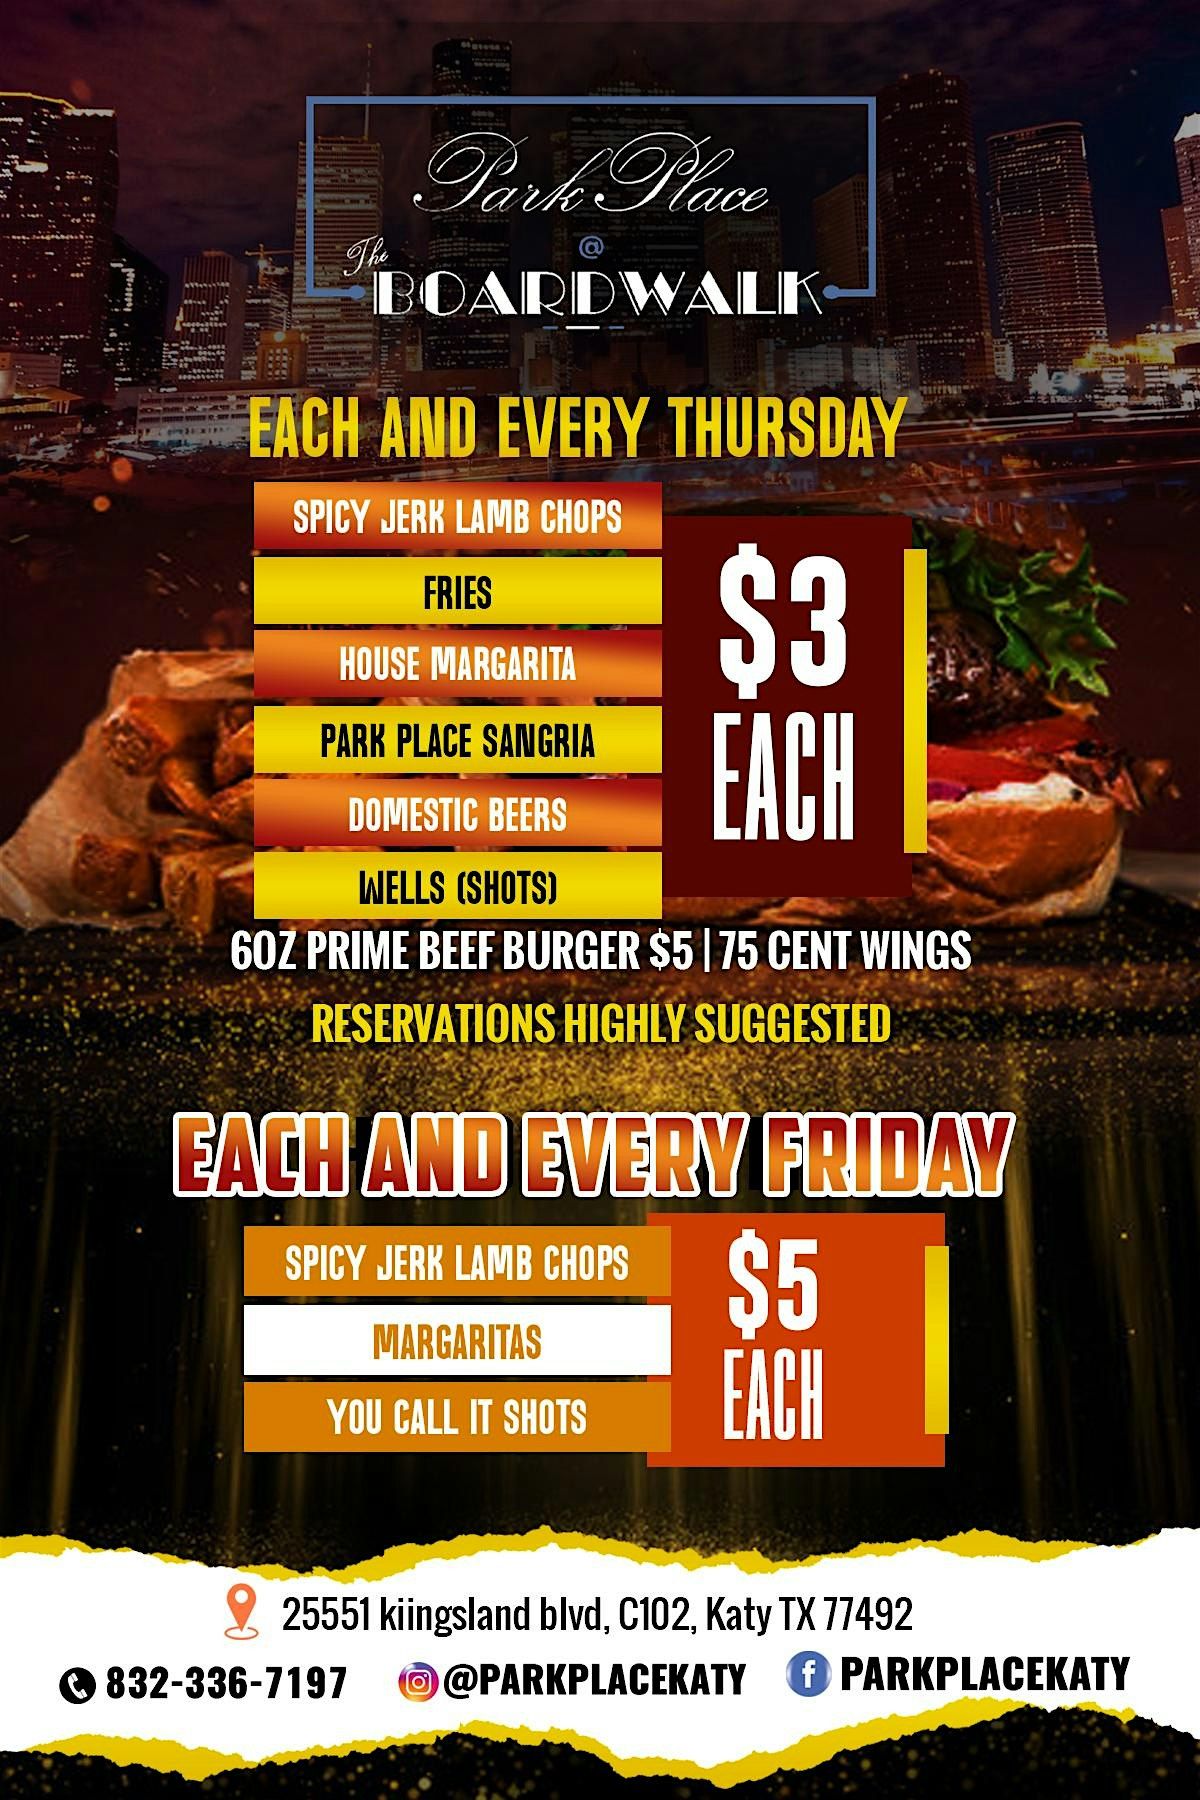 $3 Thursdays at Park Place @ The Boardwalk